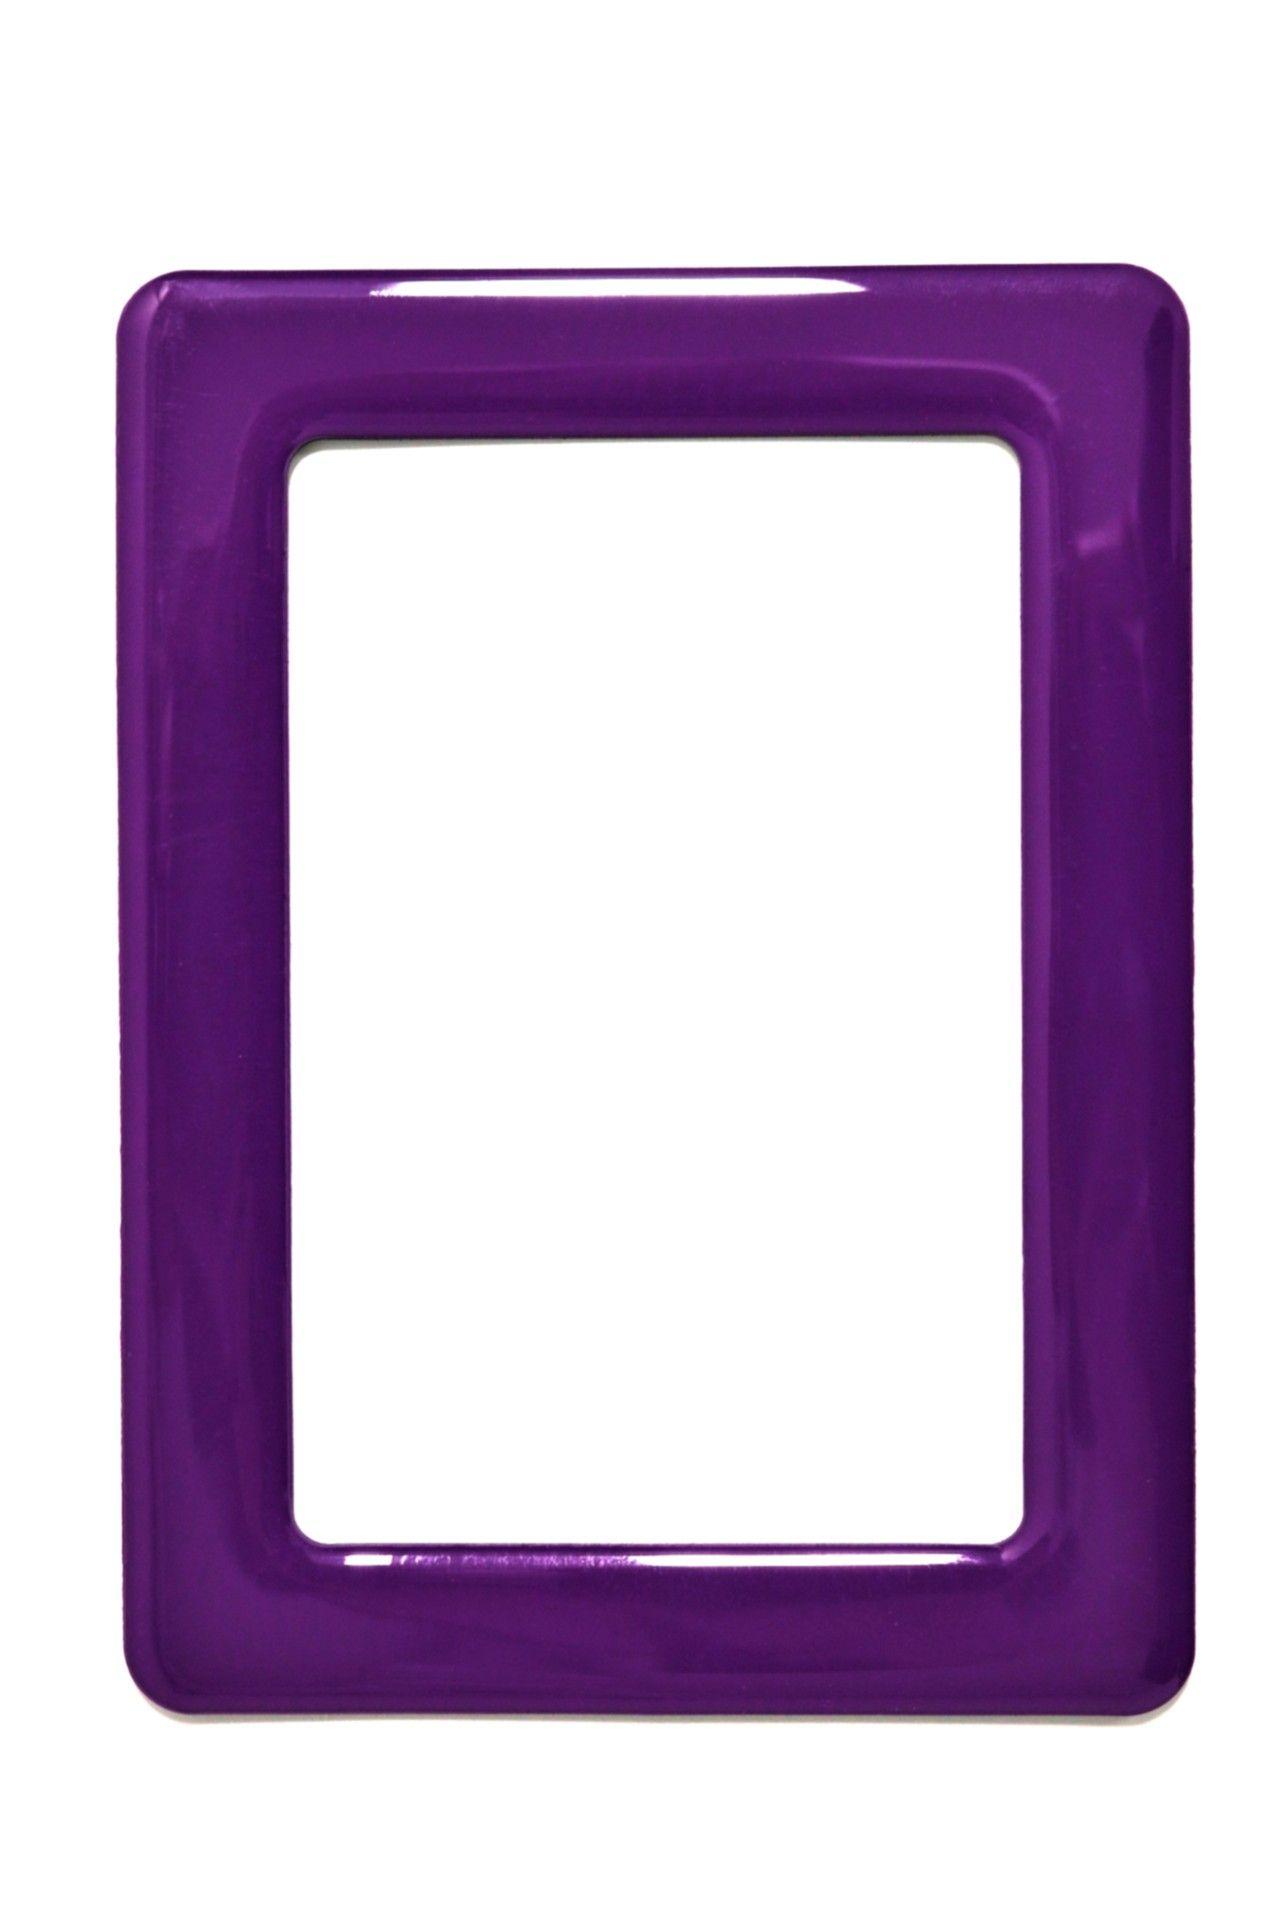 Magnetic self-adhesive frame size 12.3x8.1cm - purple